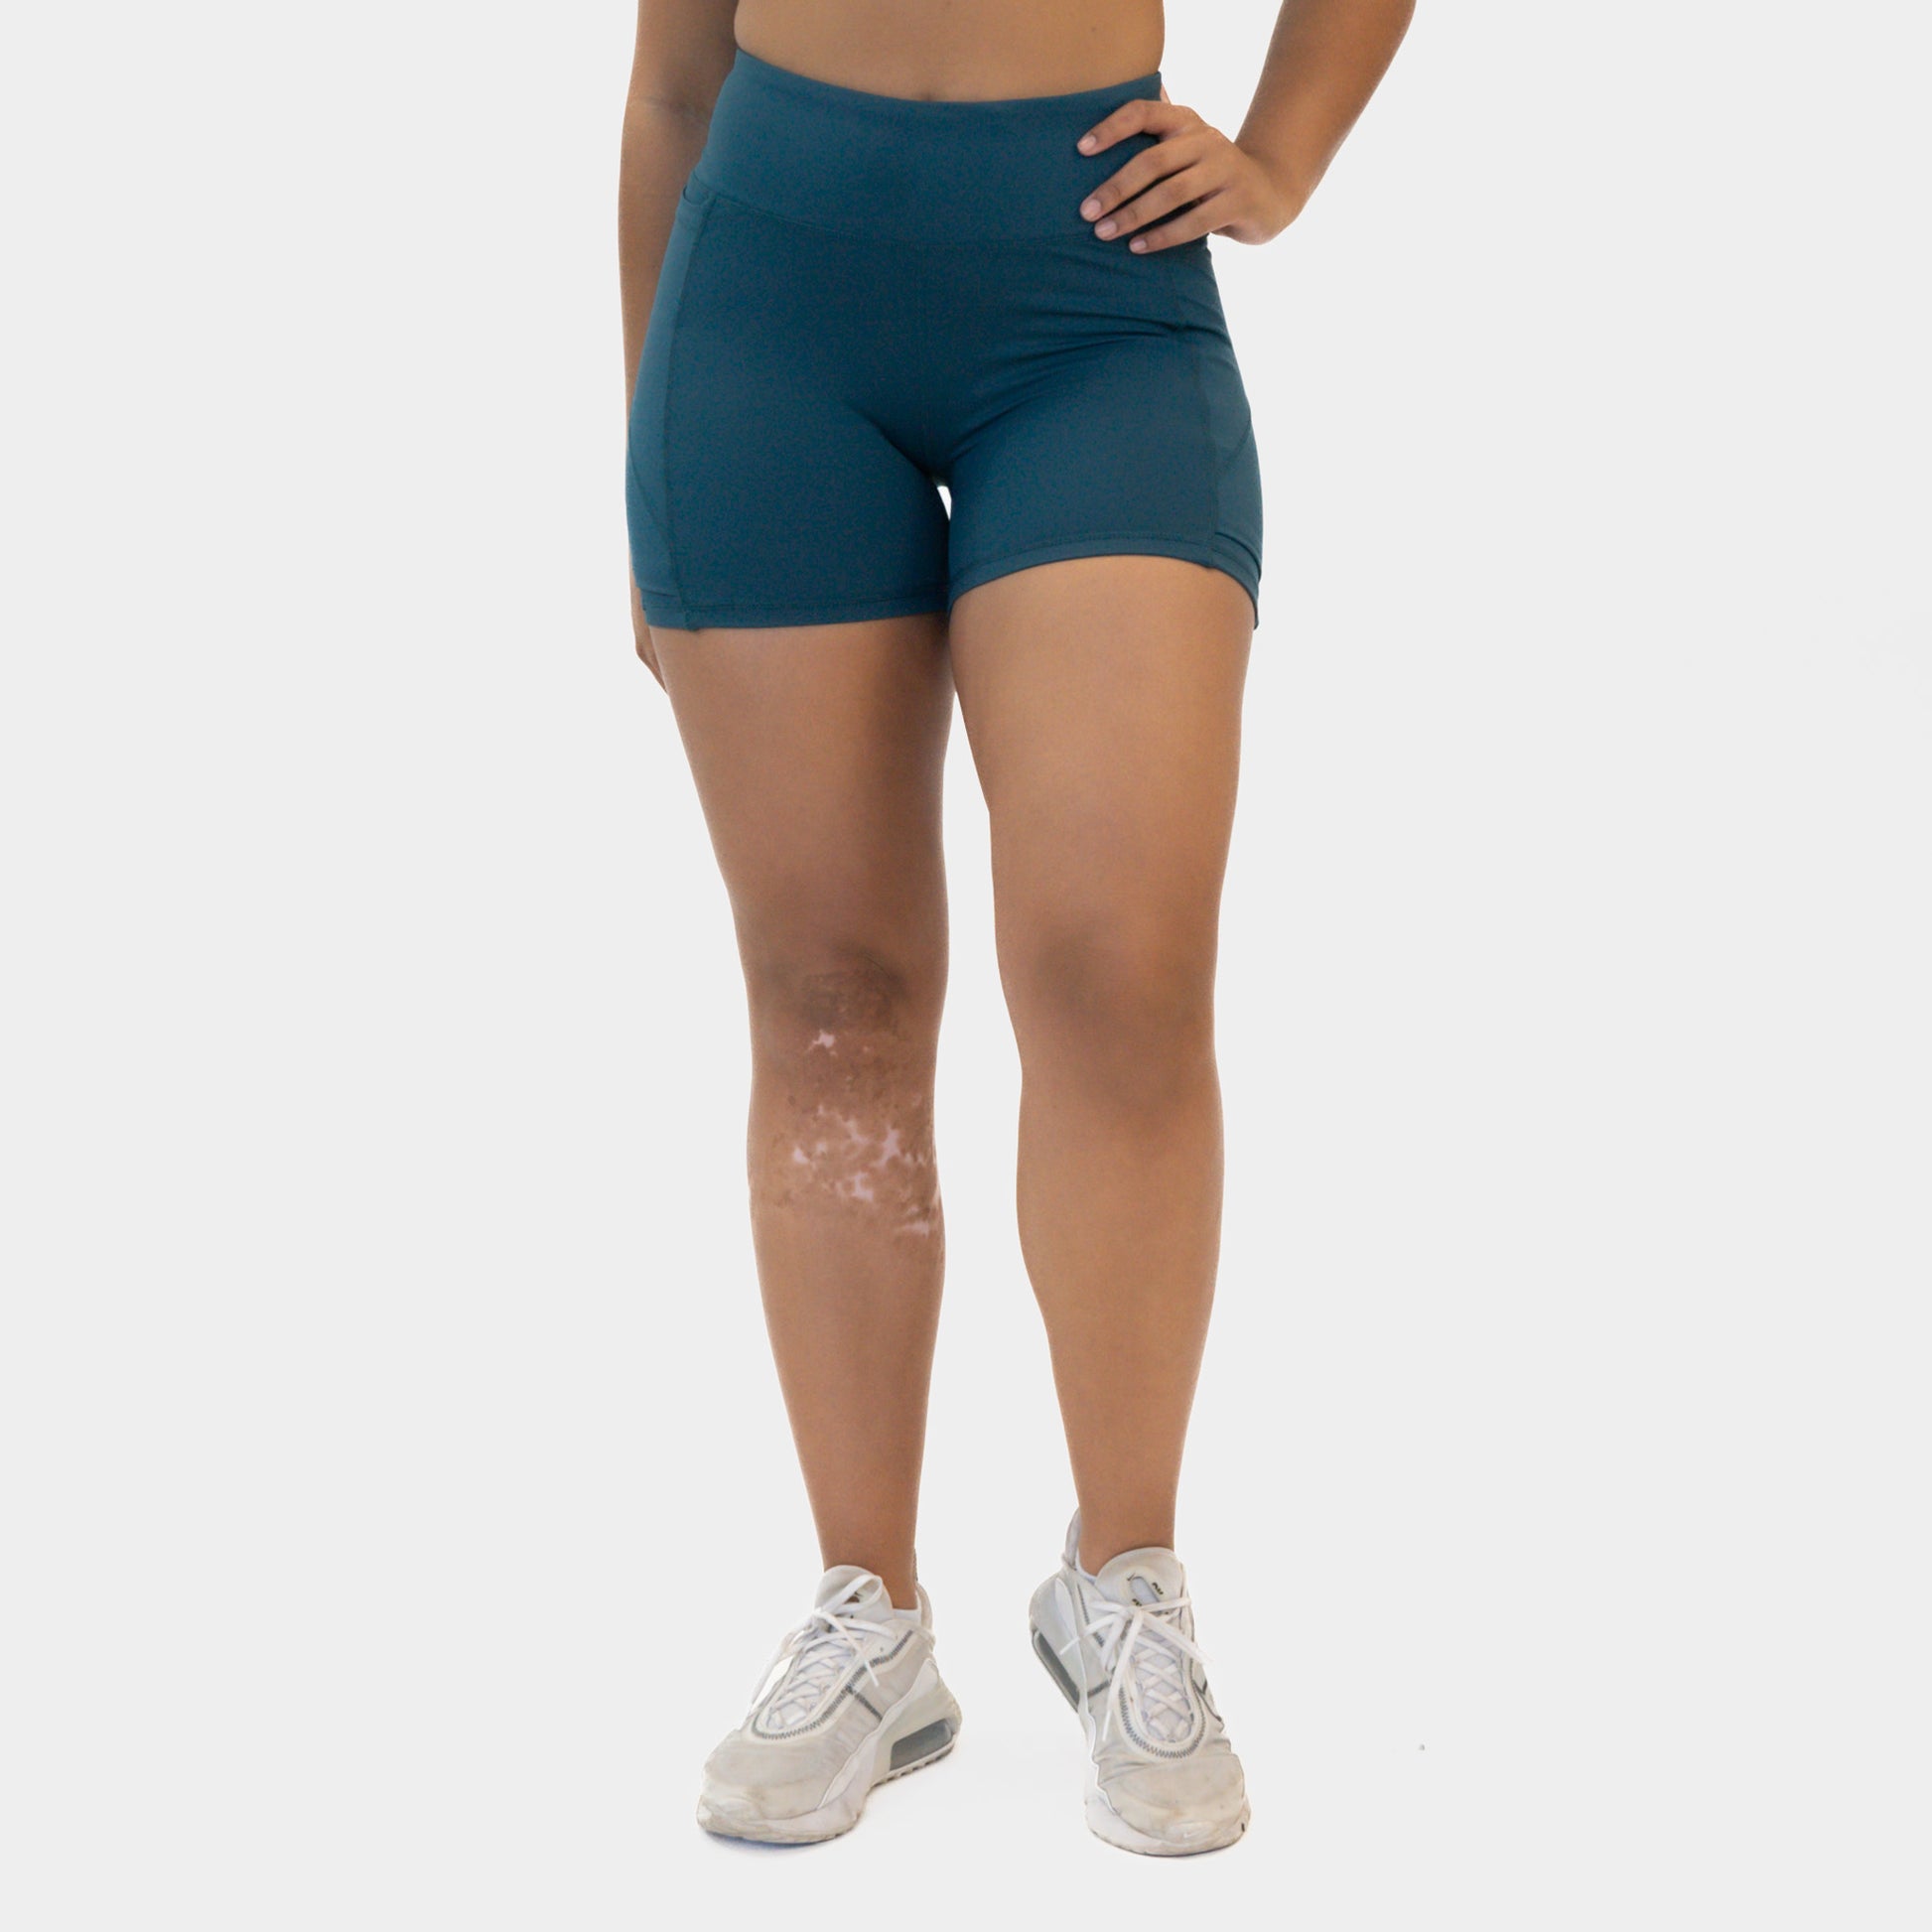 Baseline Compression Shorts (5 inch inseam)